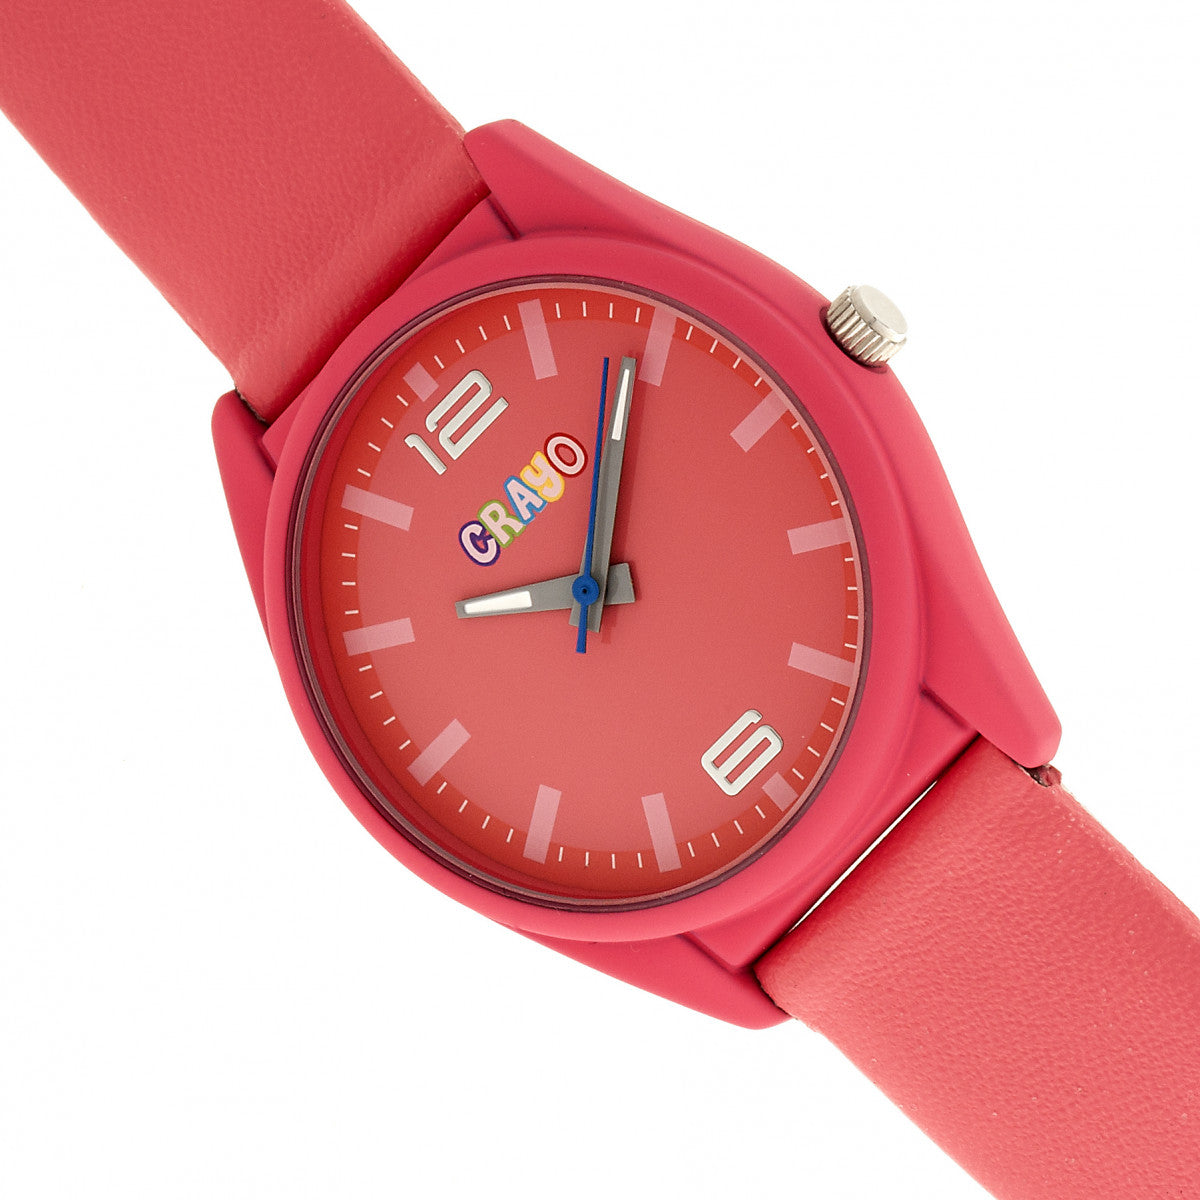 Crayo Dynamic Unisex Watch - Pink - CRACR4807